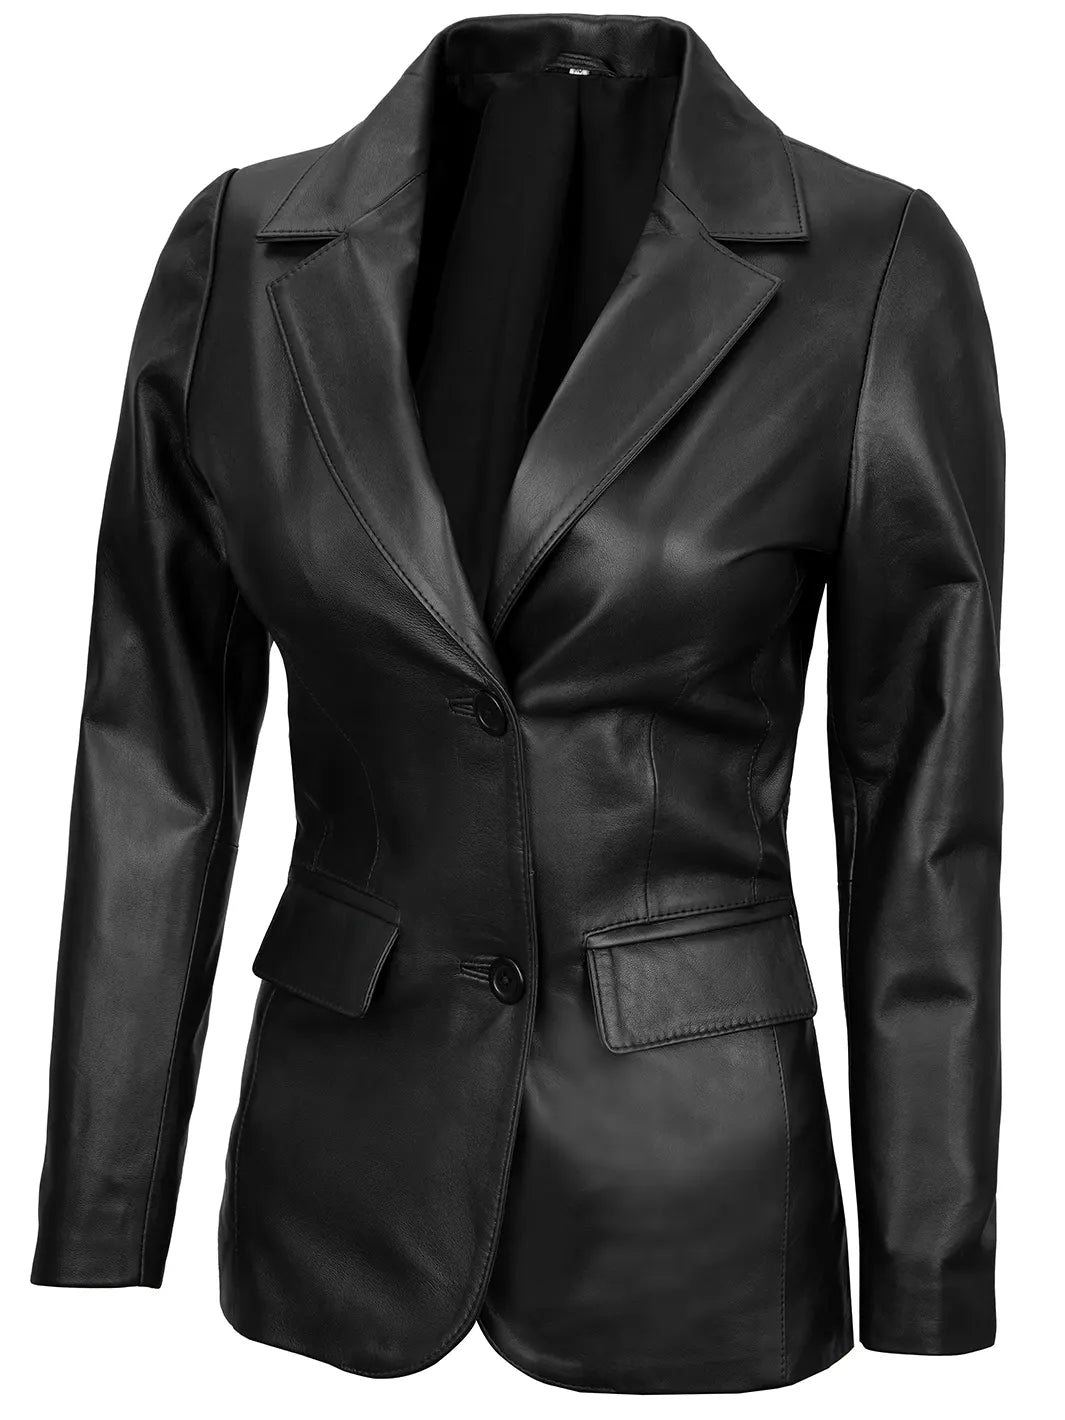 Black leather blazer for women